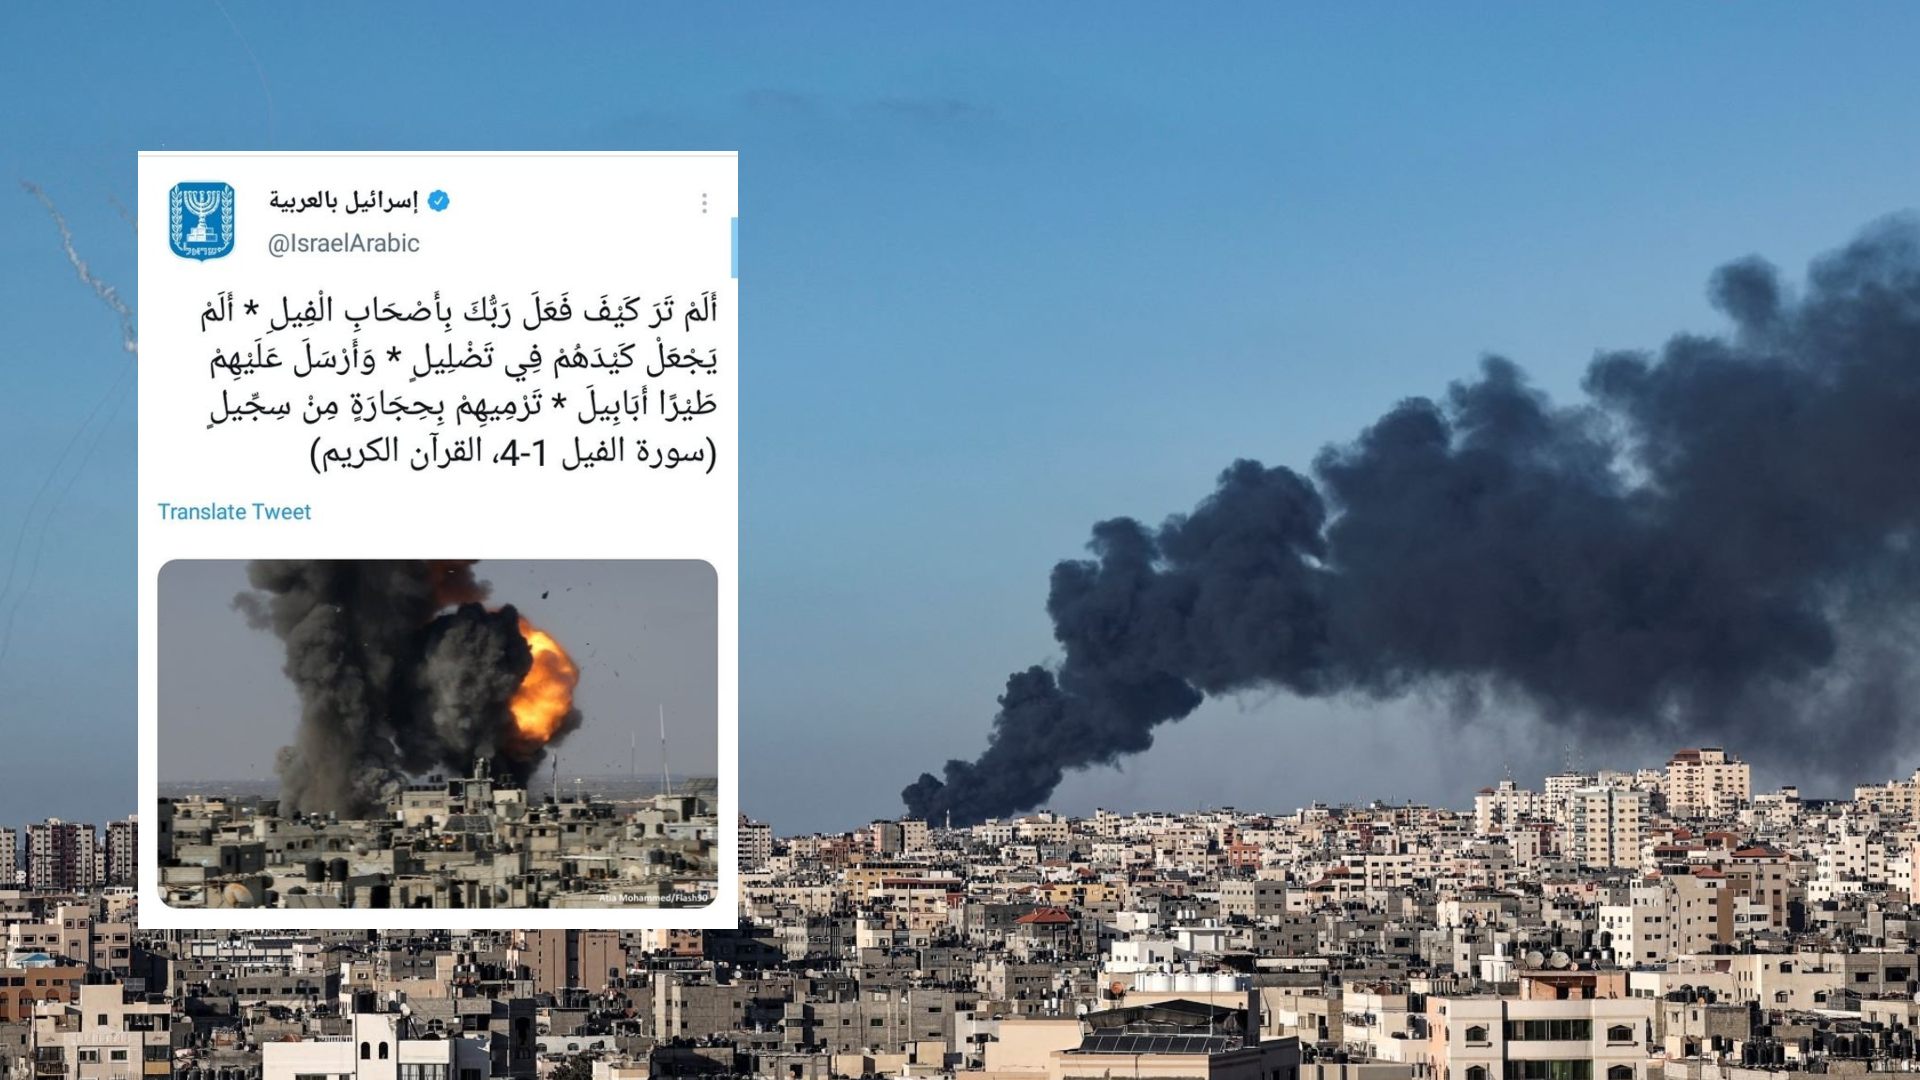 Israel Tweets Photo Of Gaza Bombing With Quranic Verse